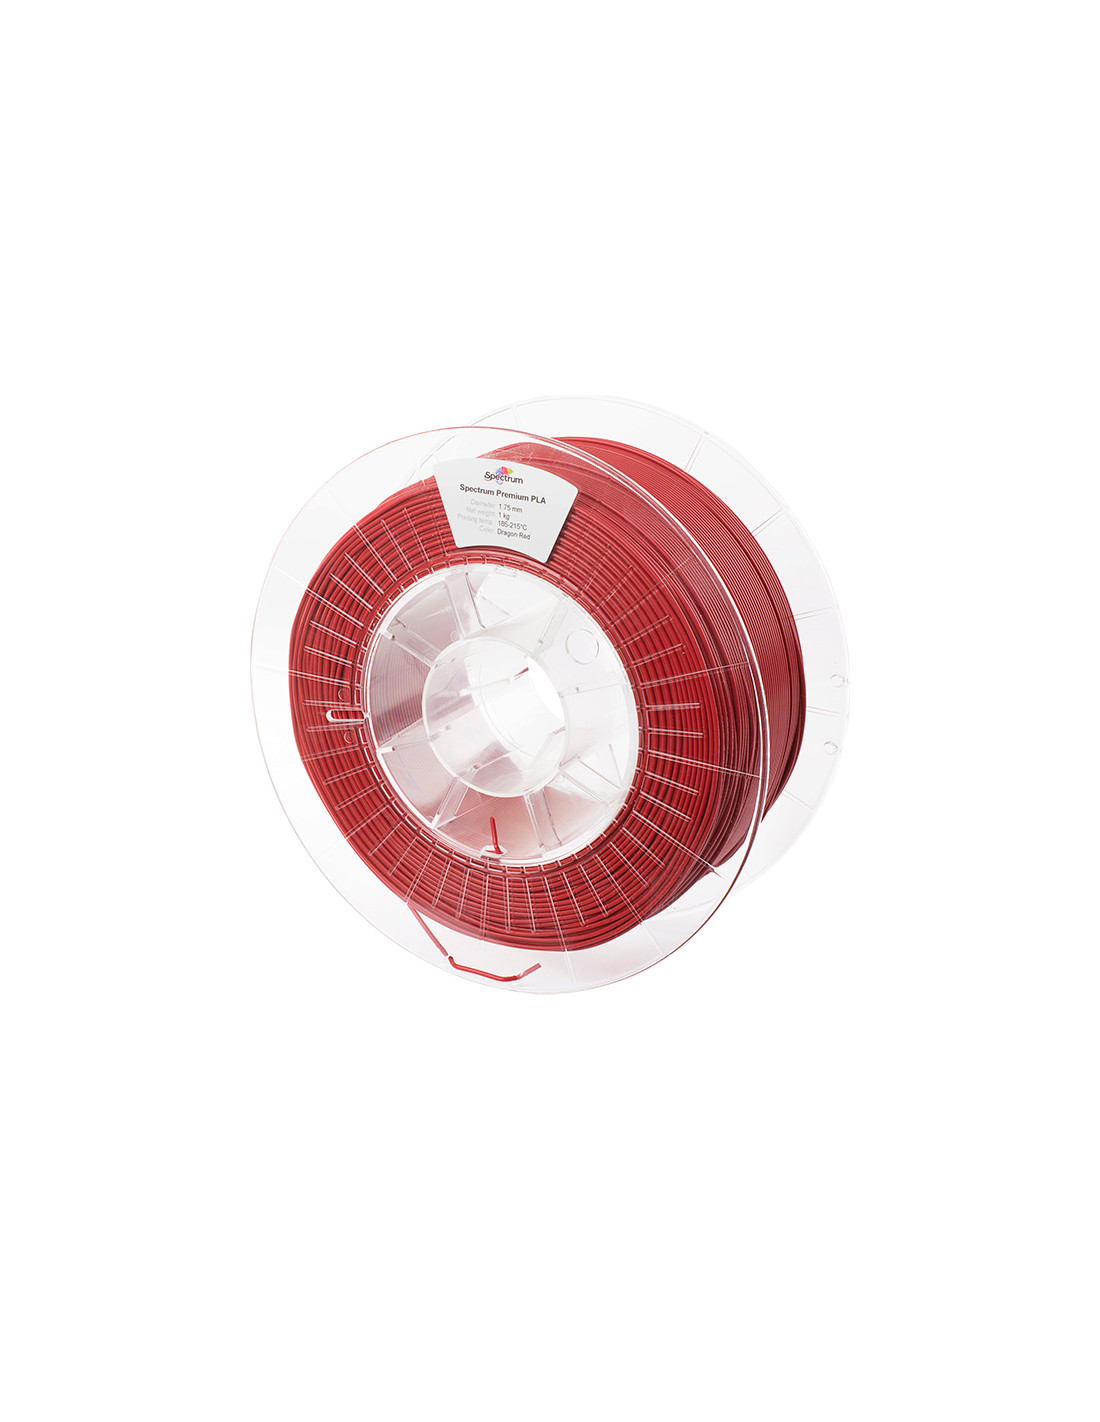 Filamento PLA Spectrum 1,75 mm Rojo Dragón (1kg)